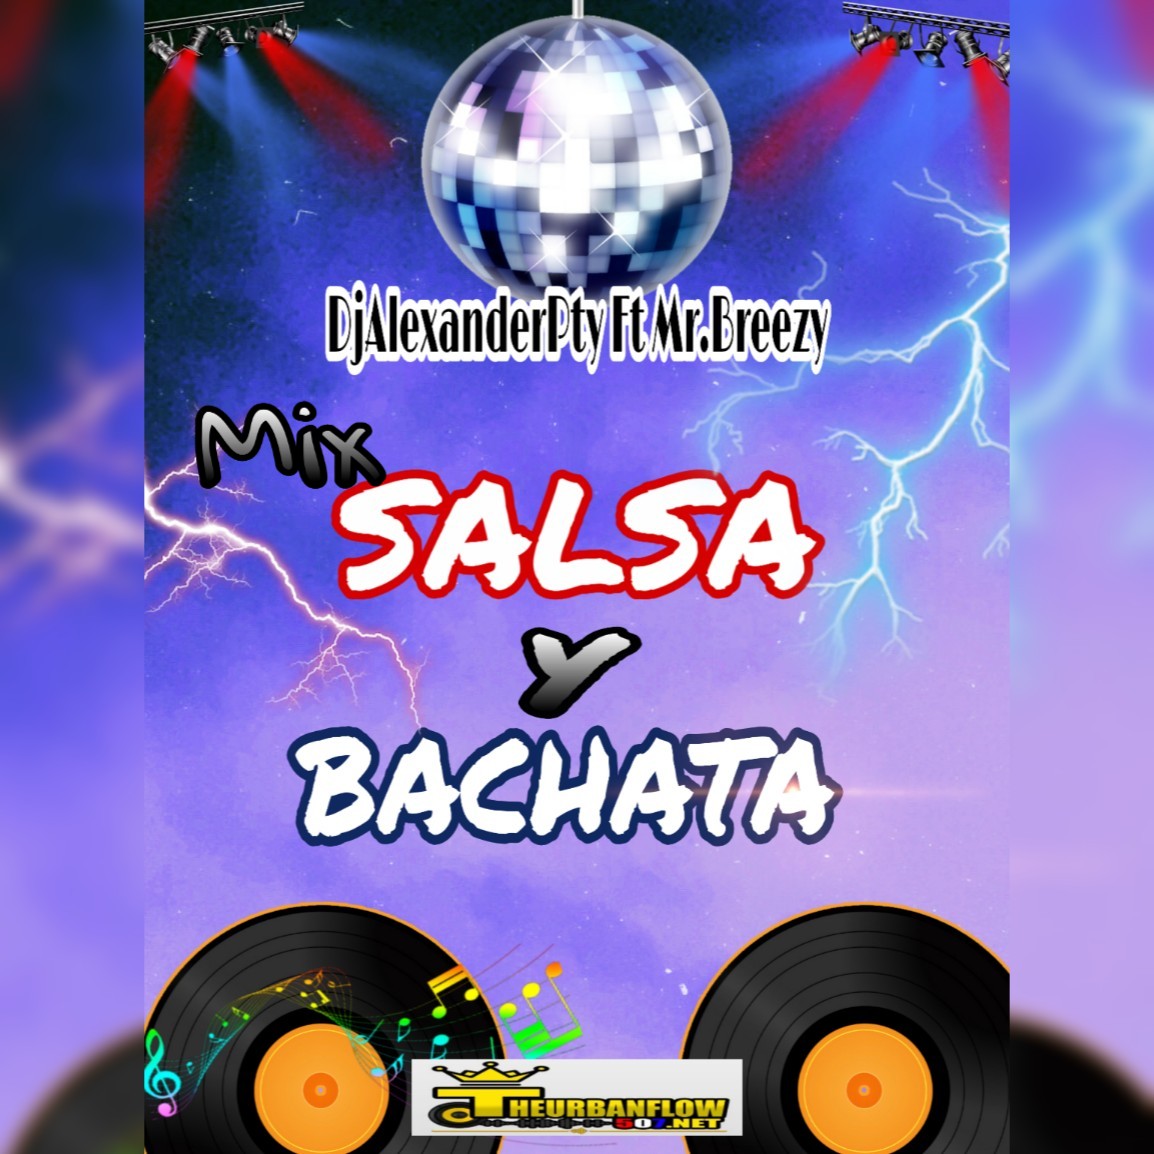 Mix Salsa y Bachata - @DjAlexanderpty - mr. Breezy